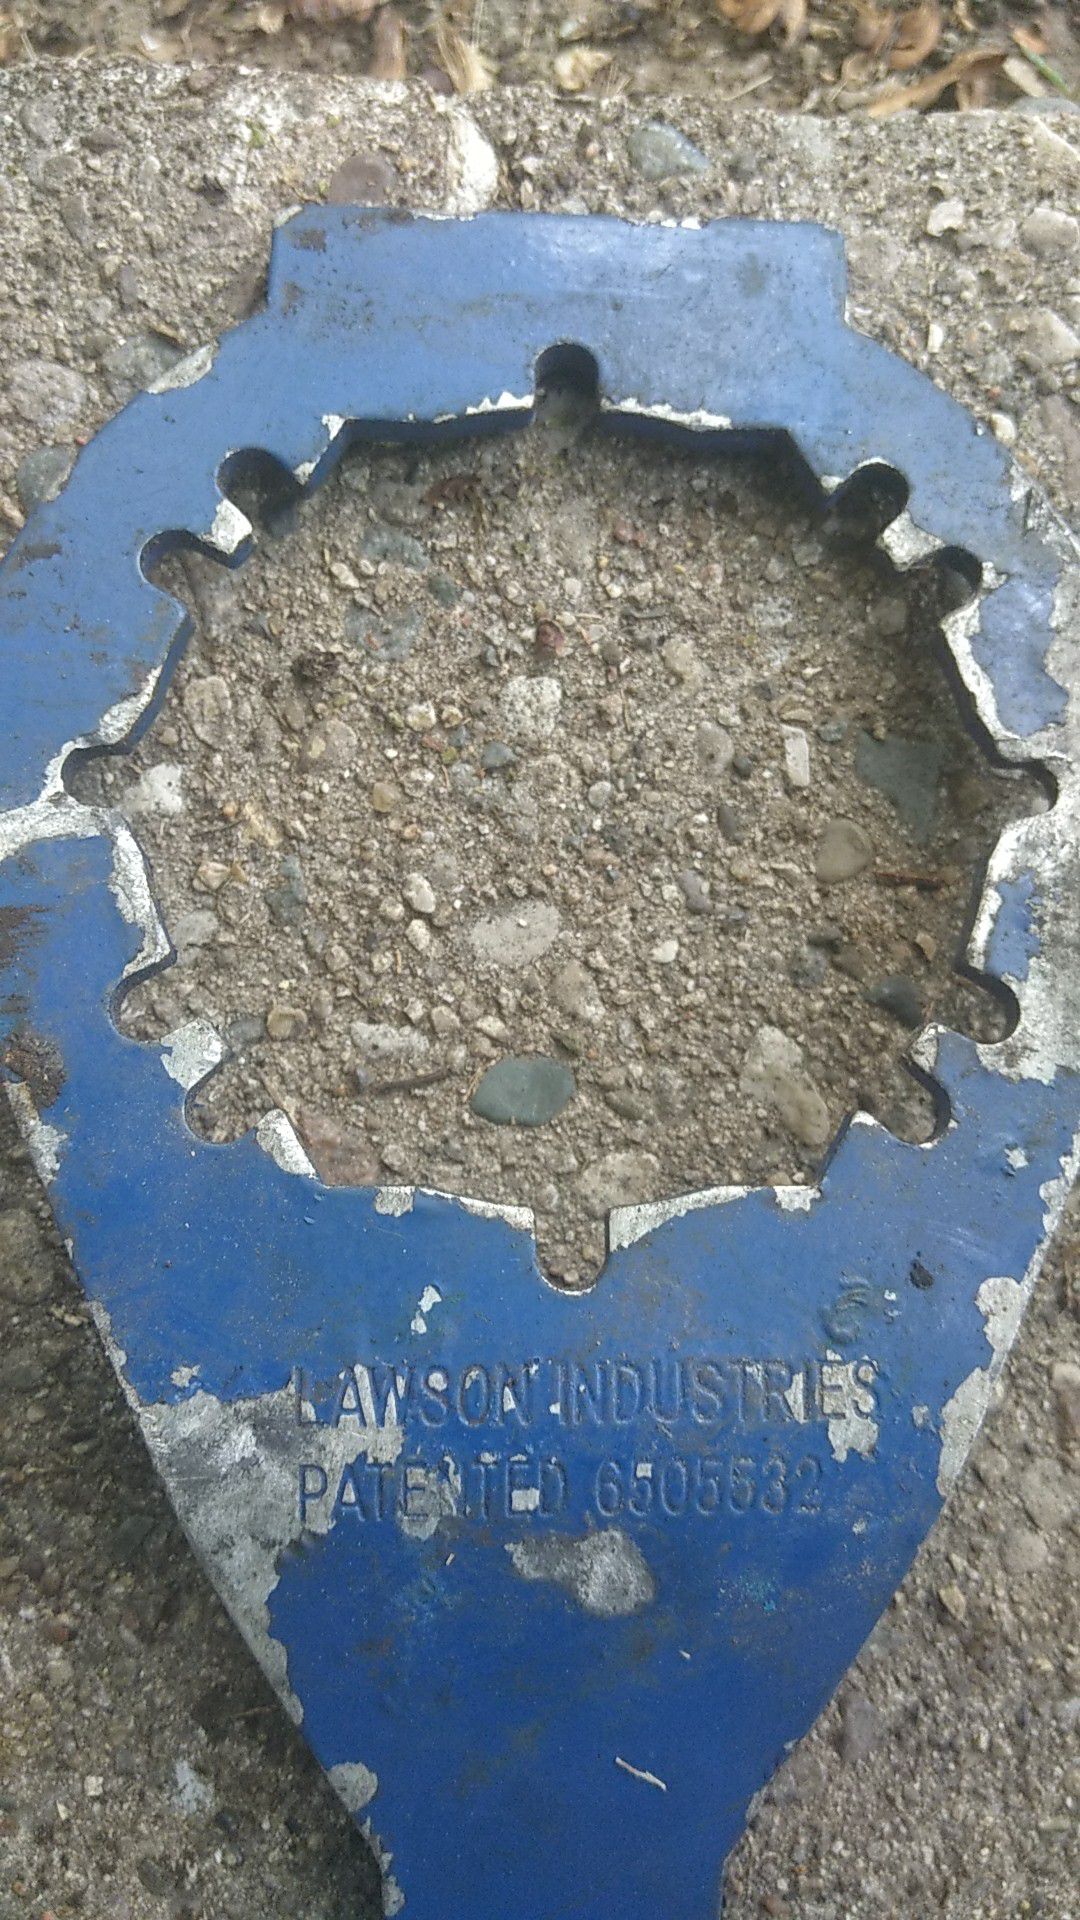 Lawson industries Sink drain wrench Universal